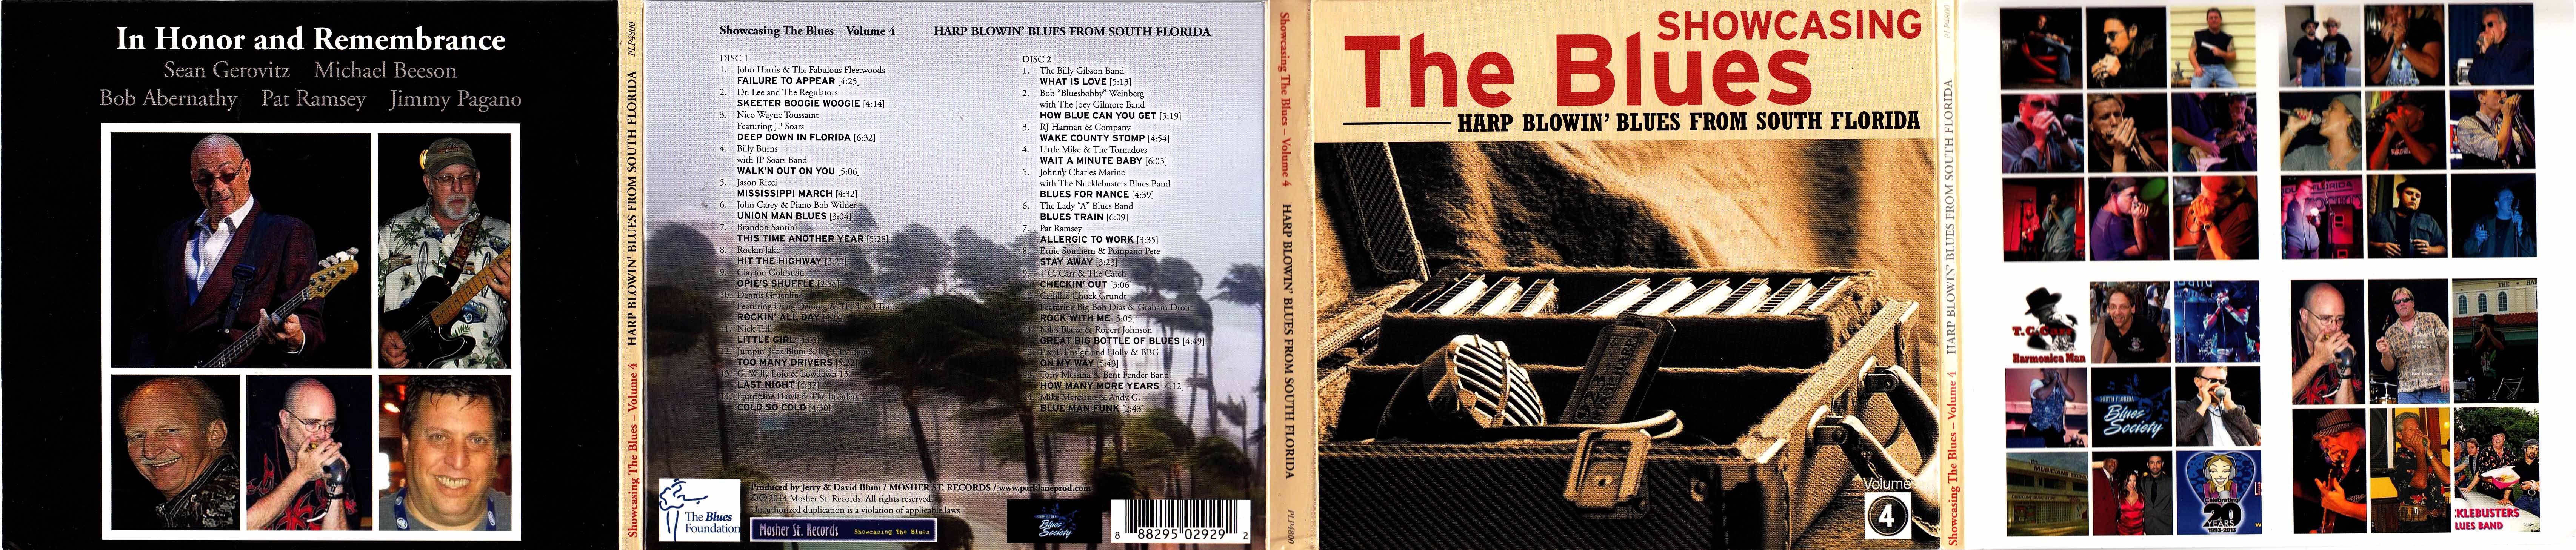 Showcasing The Blues - Volume 4 - CD1